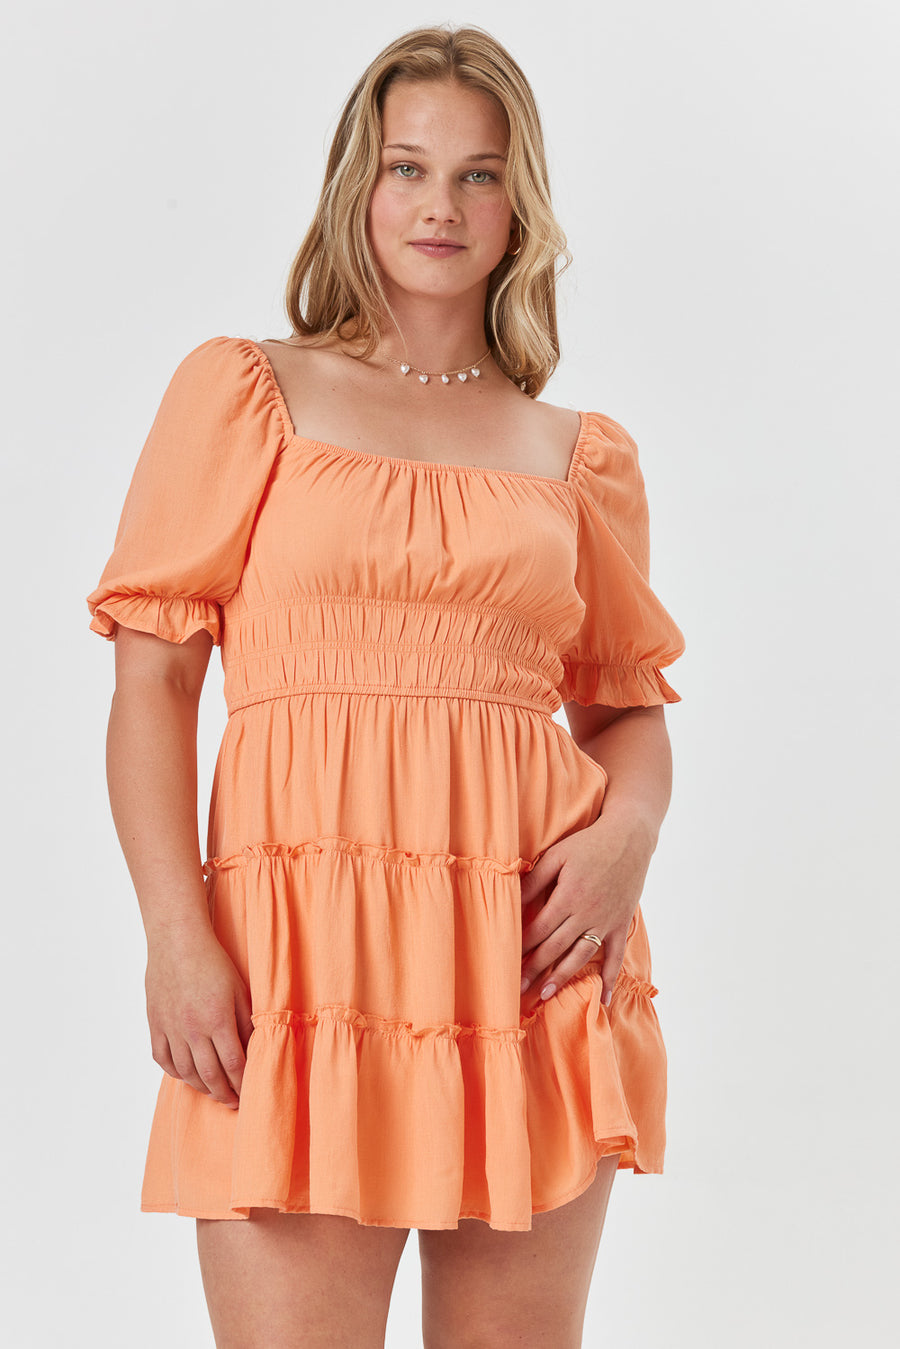 Cantaloupe Tier Dress - Trixxi Clothing